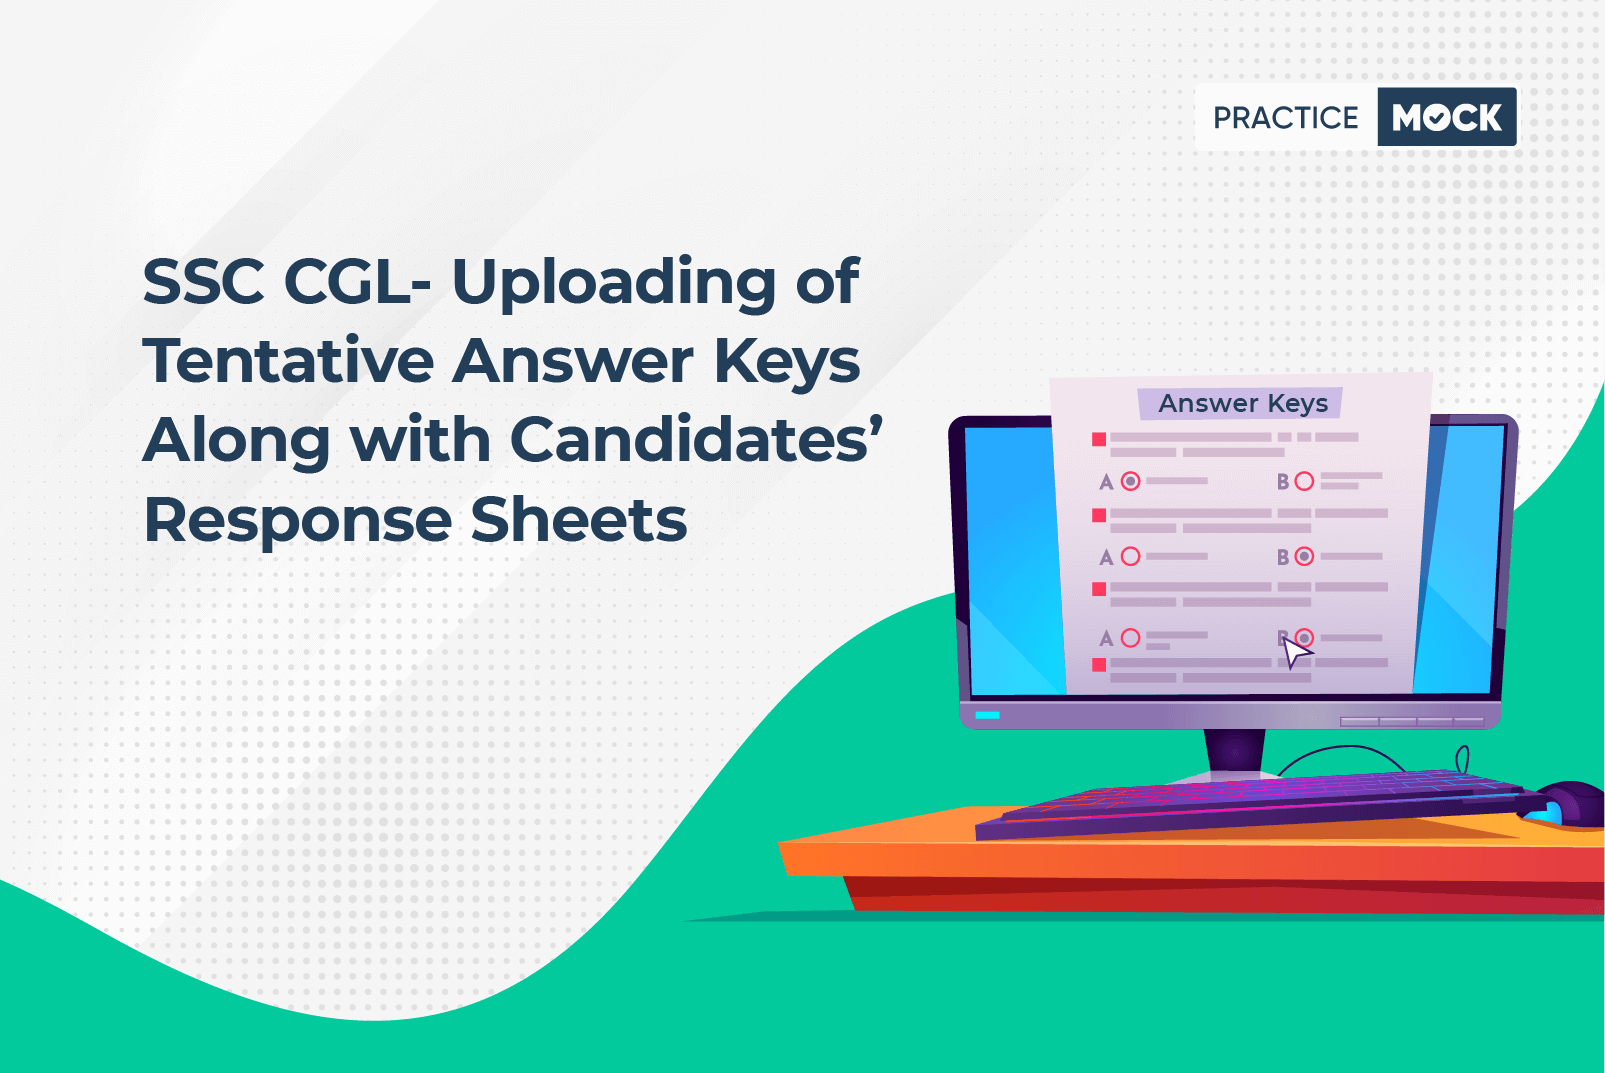 SSC CGL- Uploading of Tentative Answer Keys along with Candidates’ Response Sheets